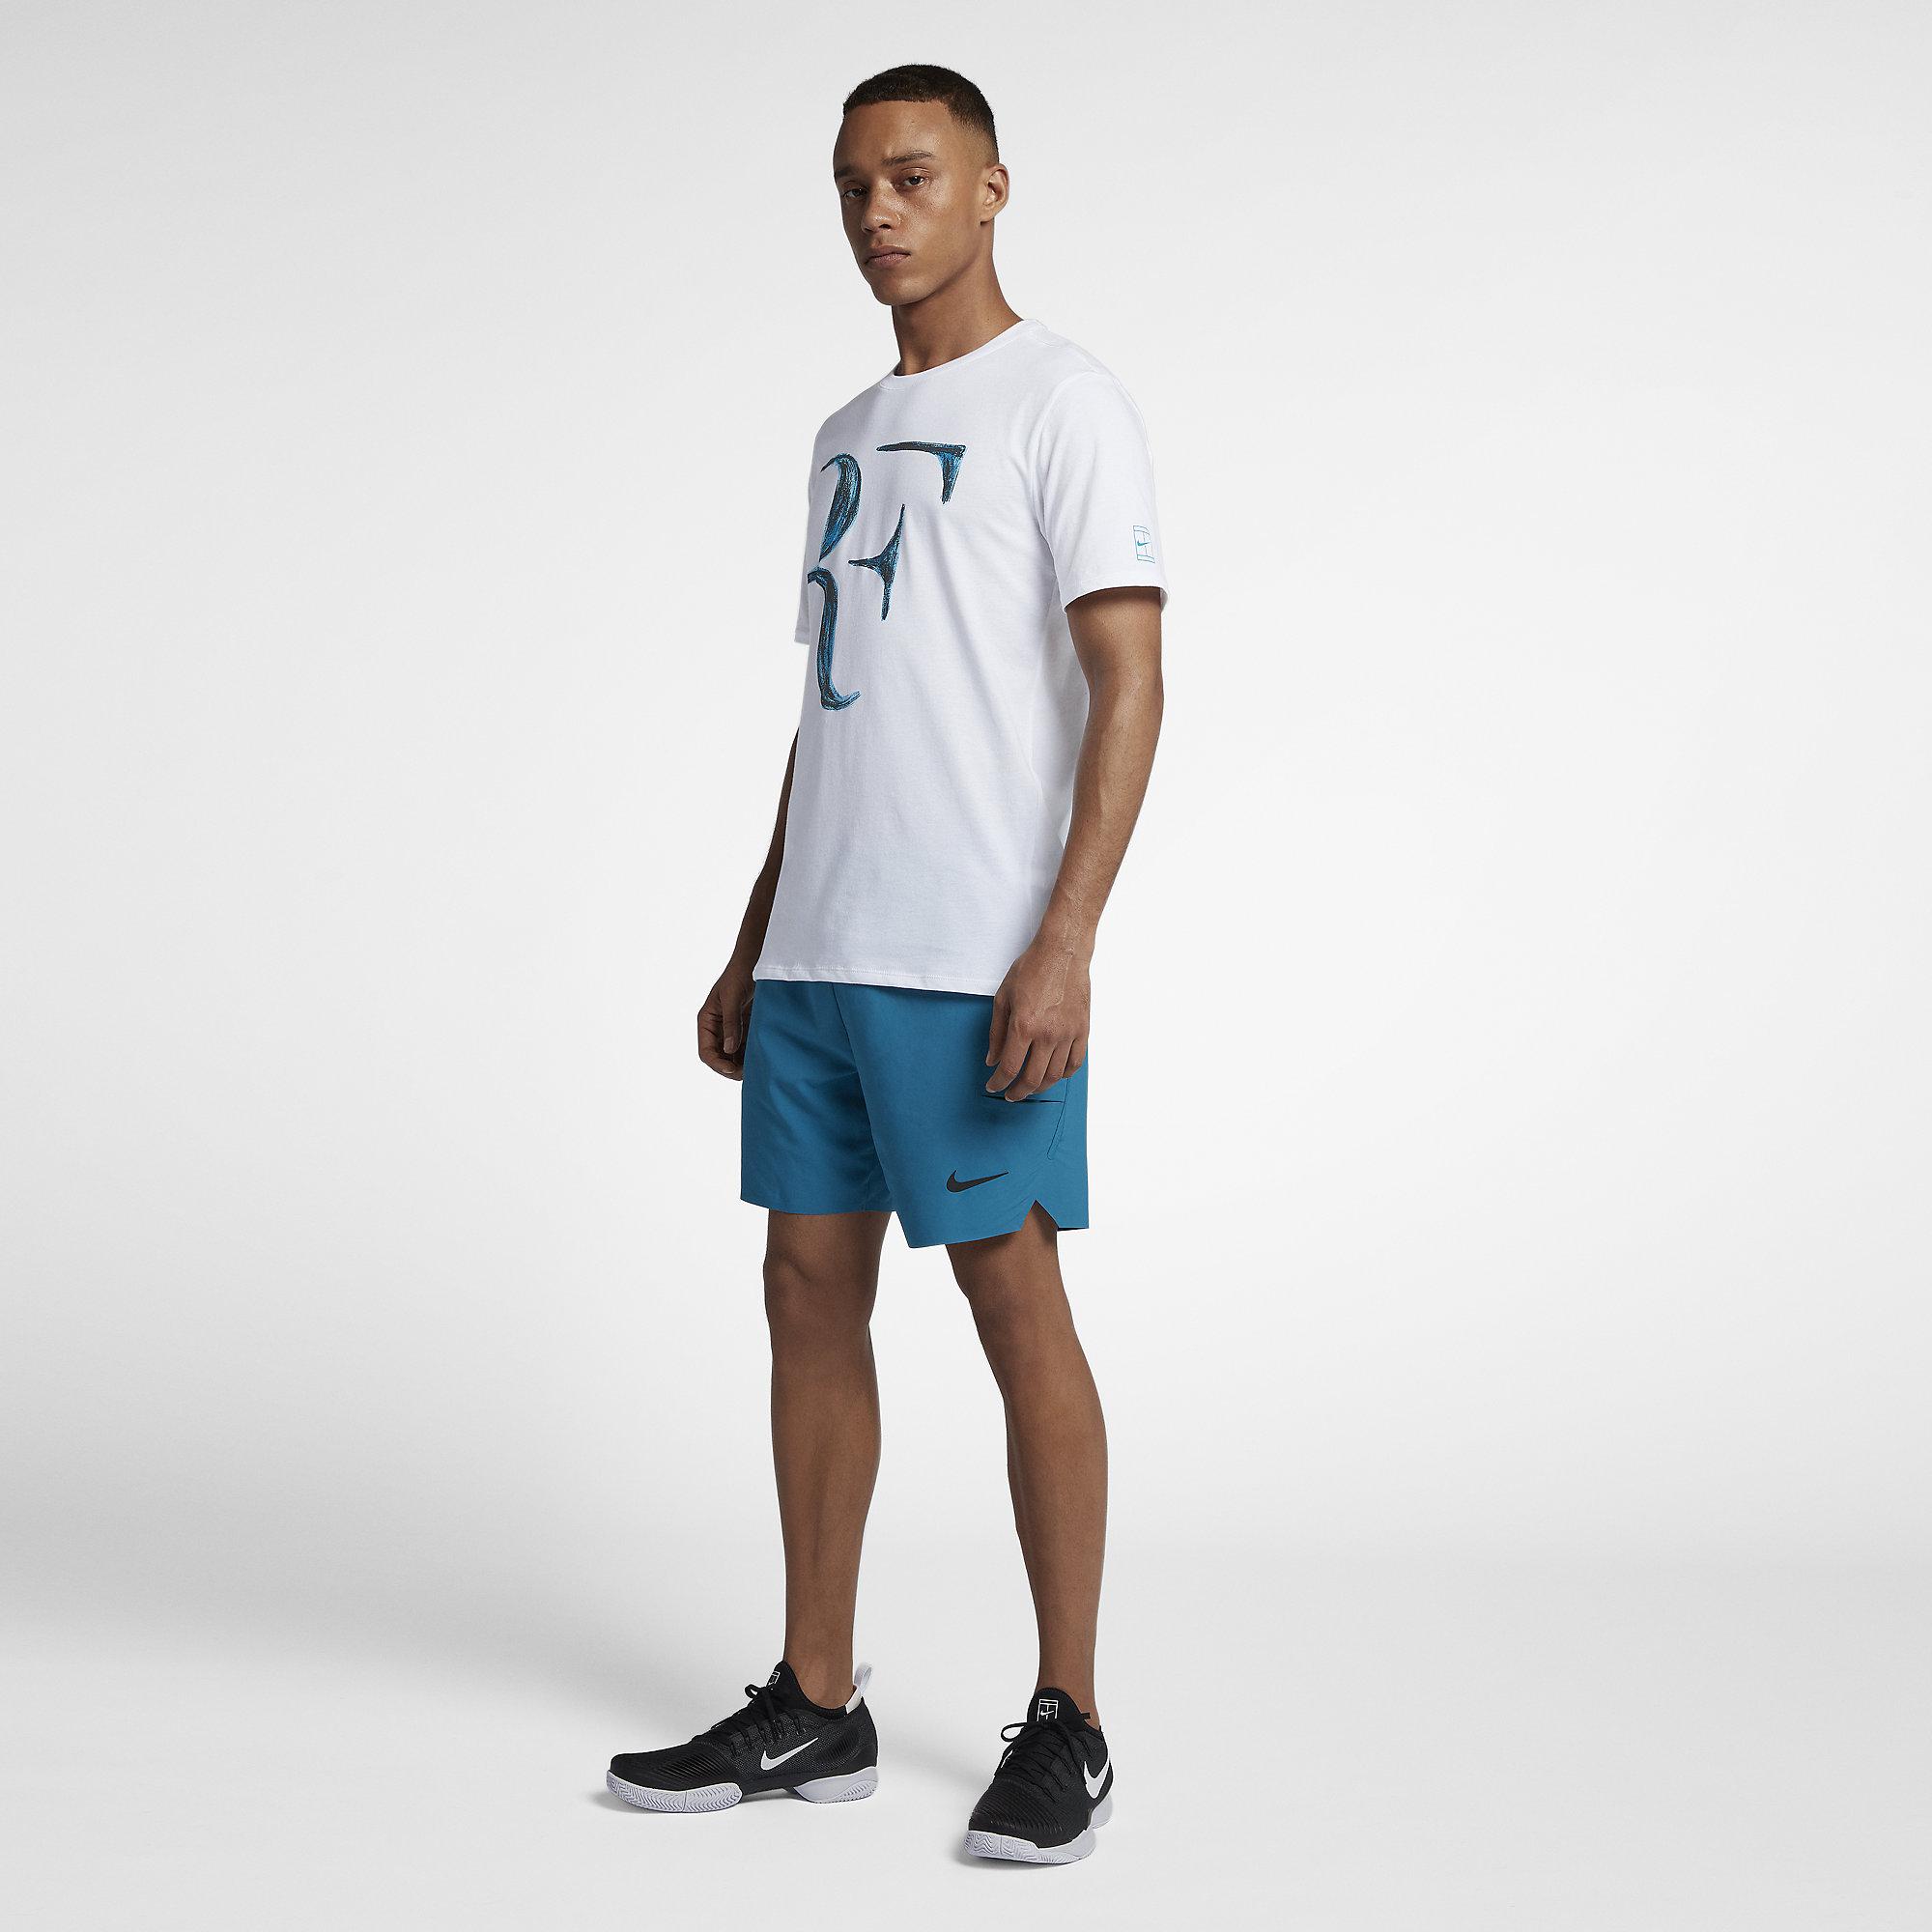 Nike Mens RF T-Shirt - White/Neo Turquoise - Tennisnuts.com